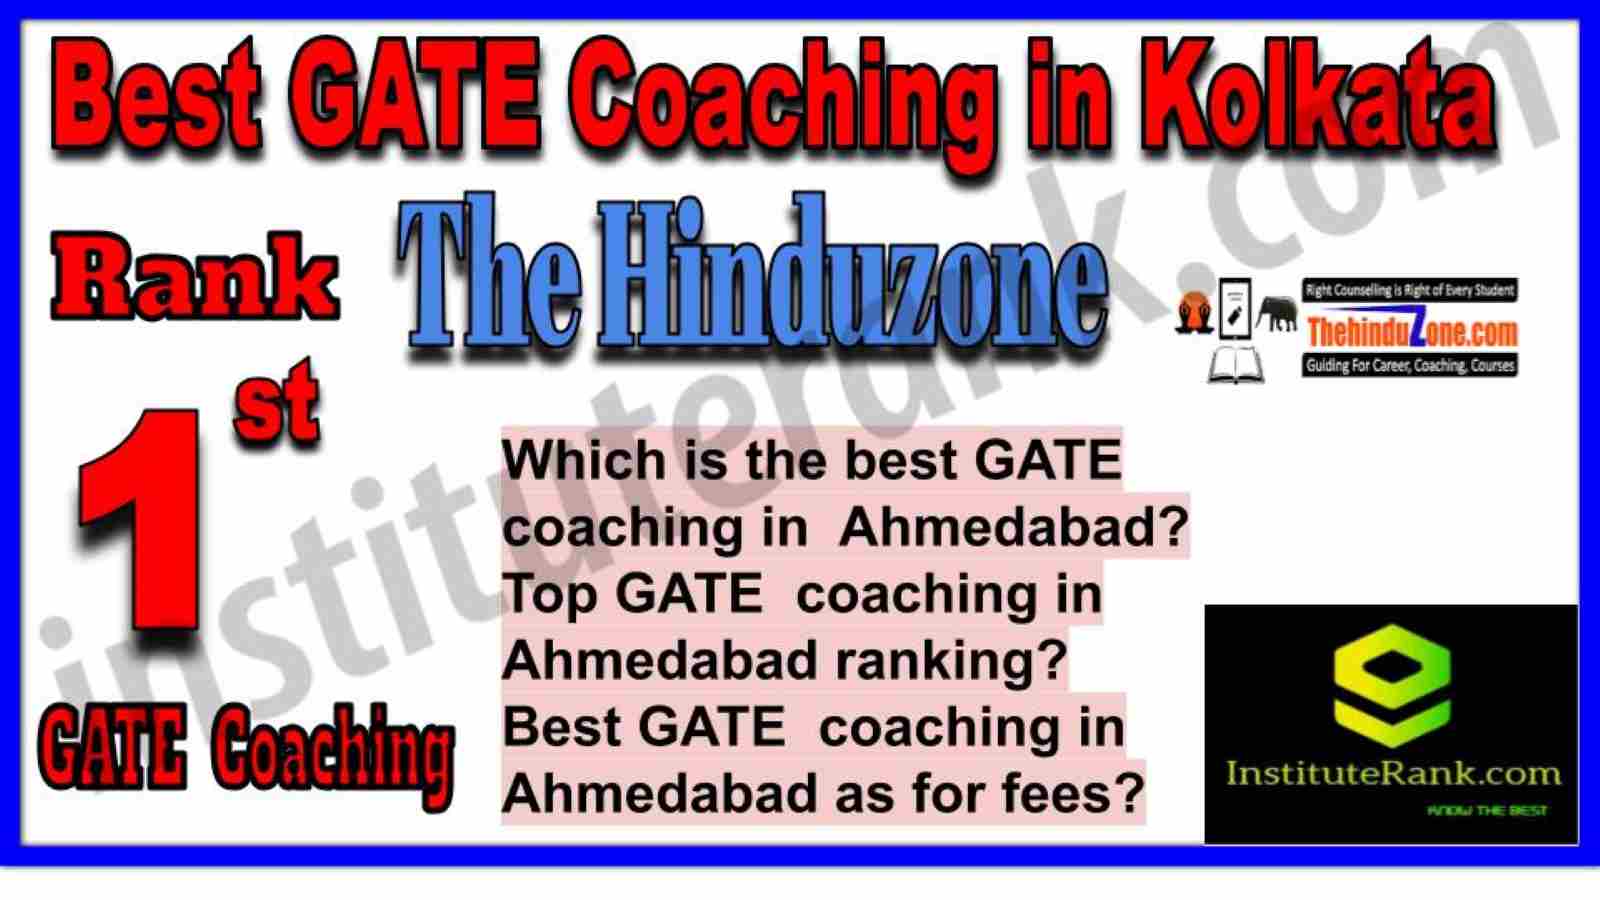 Rank 1 The Hinduzone | Best GATE Coaching Institutes In Kolkata